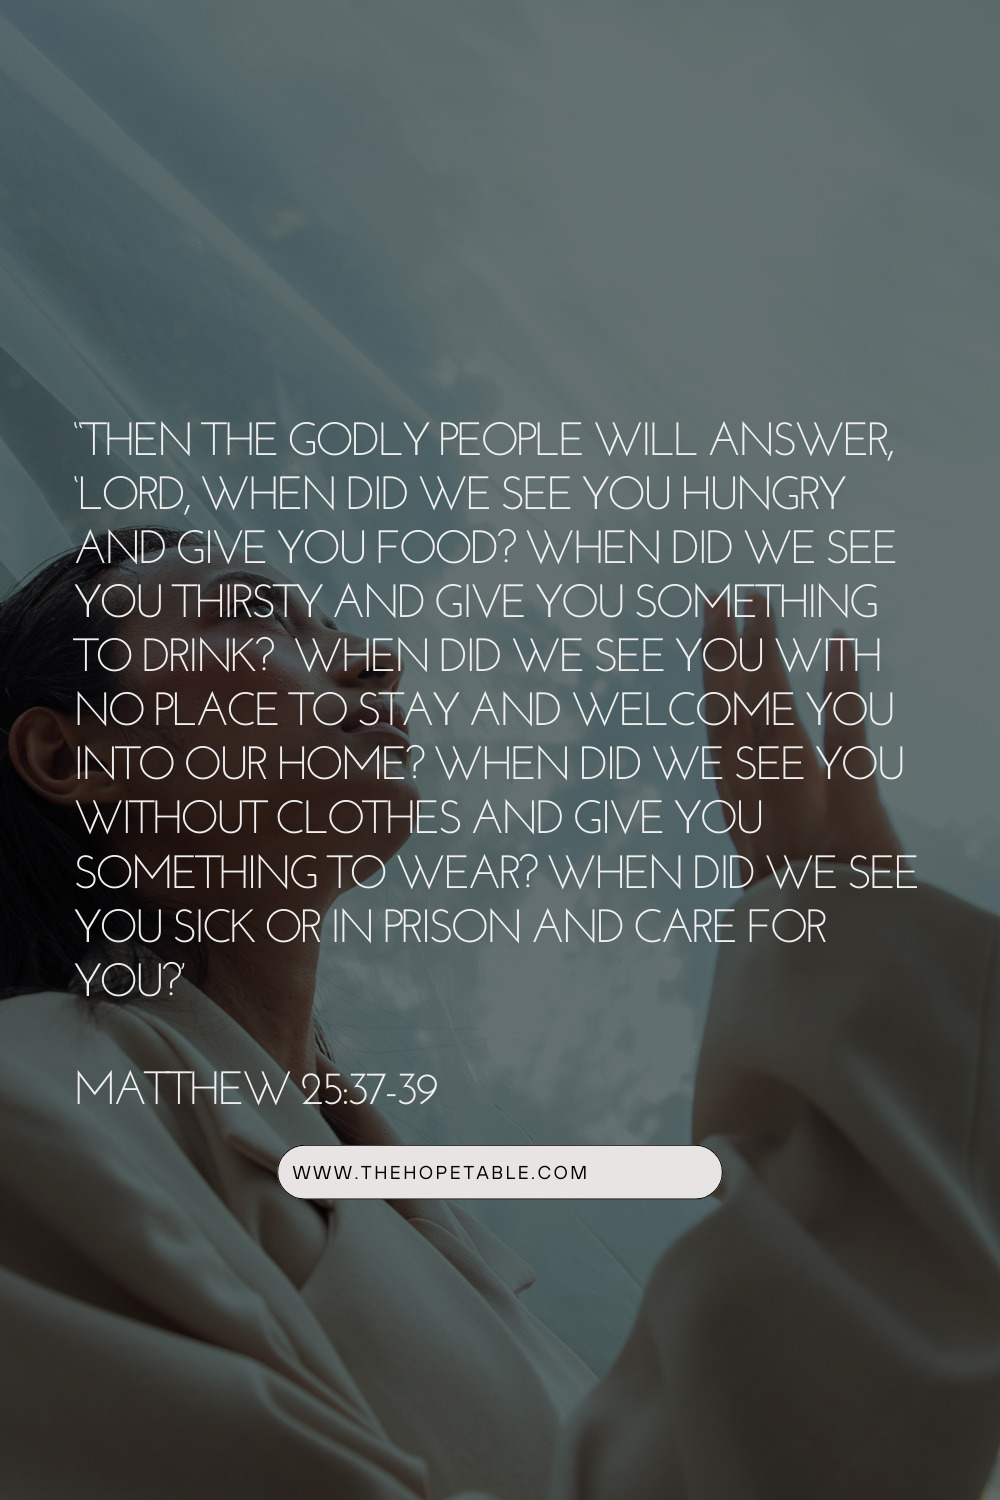 Rough Sleepers UK - Christian Blog Post - Matthew 25:37-39